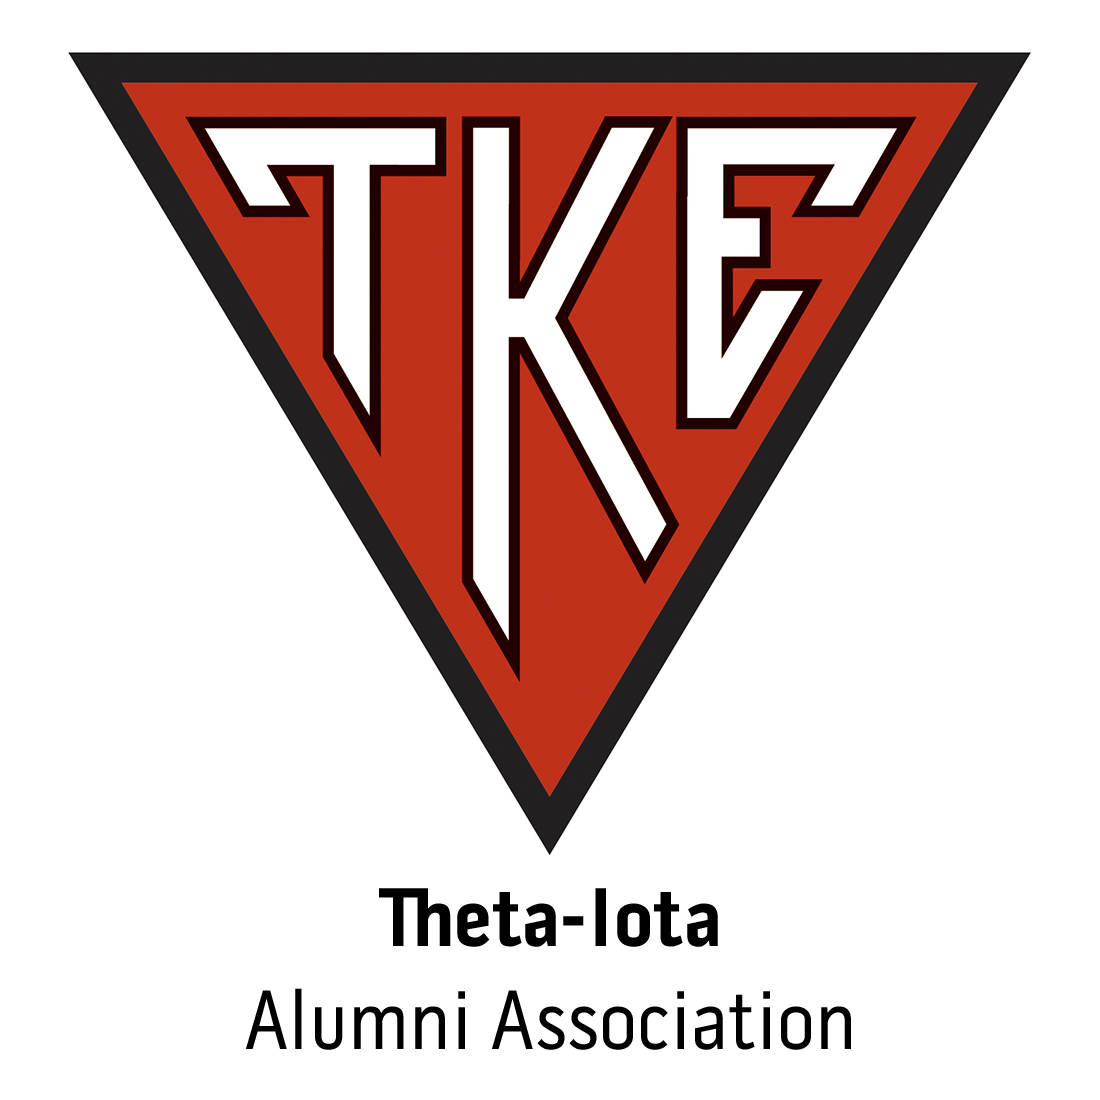 Theta-Iota Alumni Association at Northern Michigan University